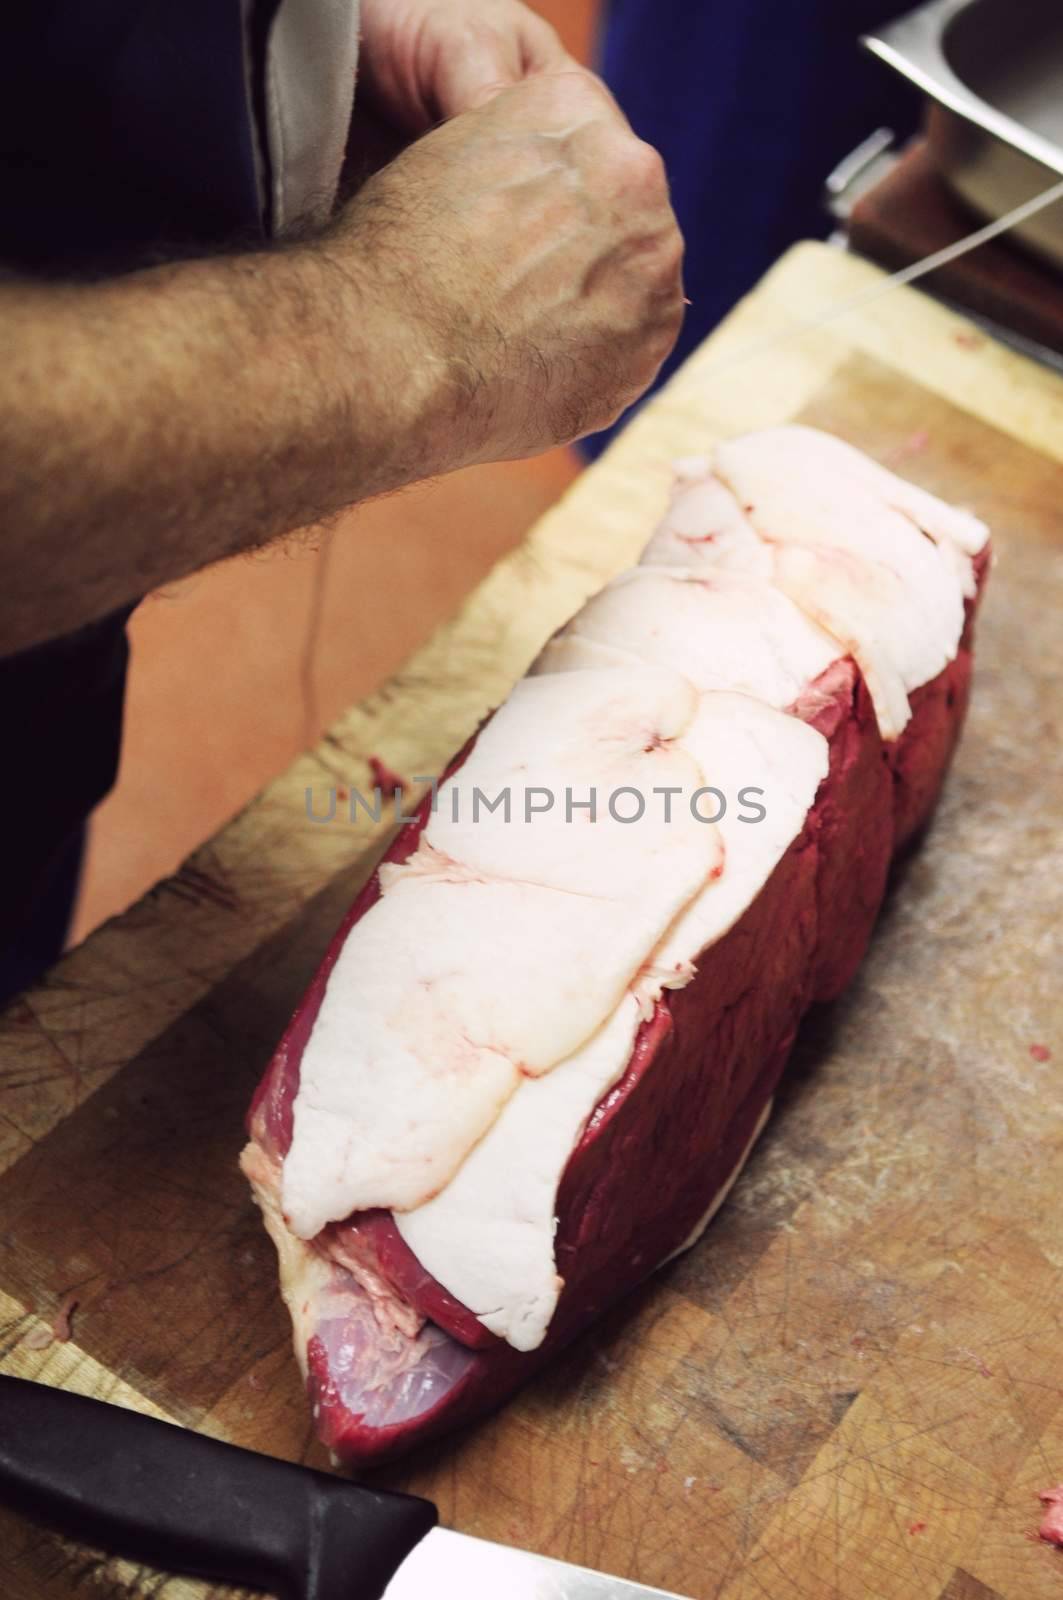 butchering meat